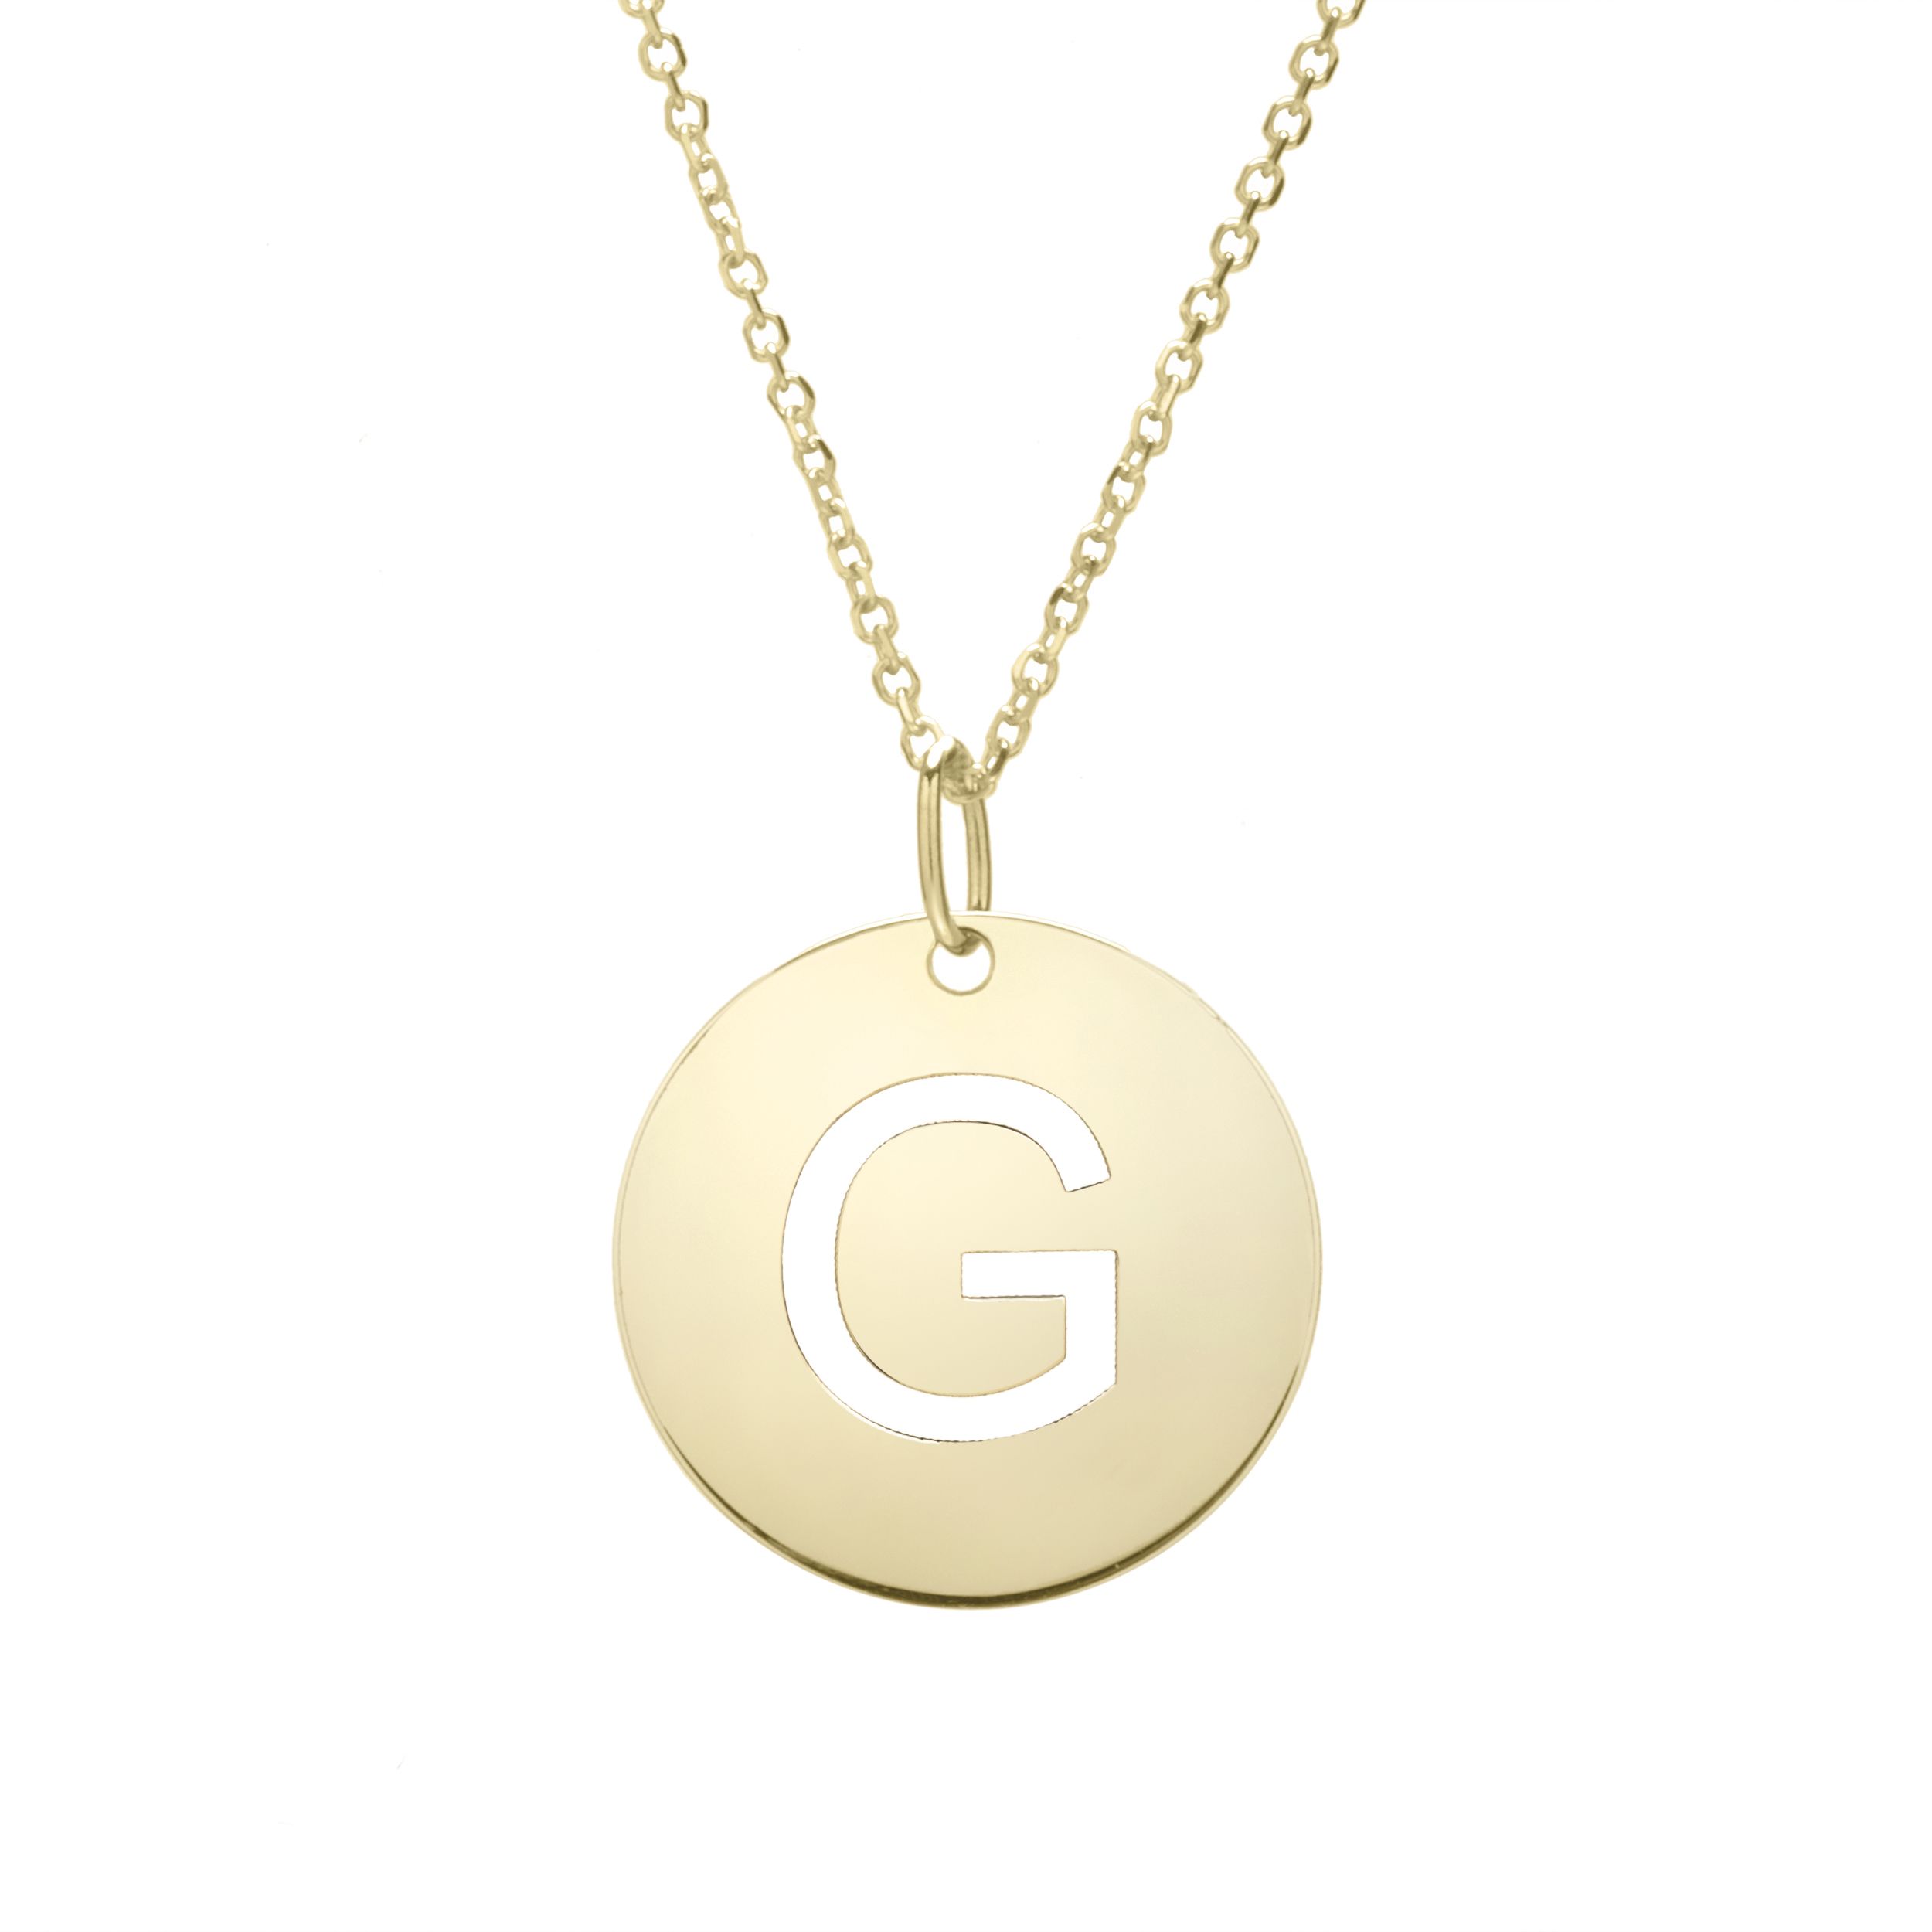 G' Initial Necklace - Antonius Jewelry